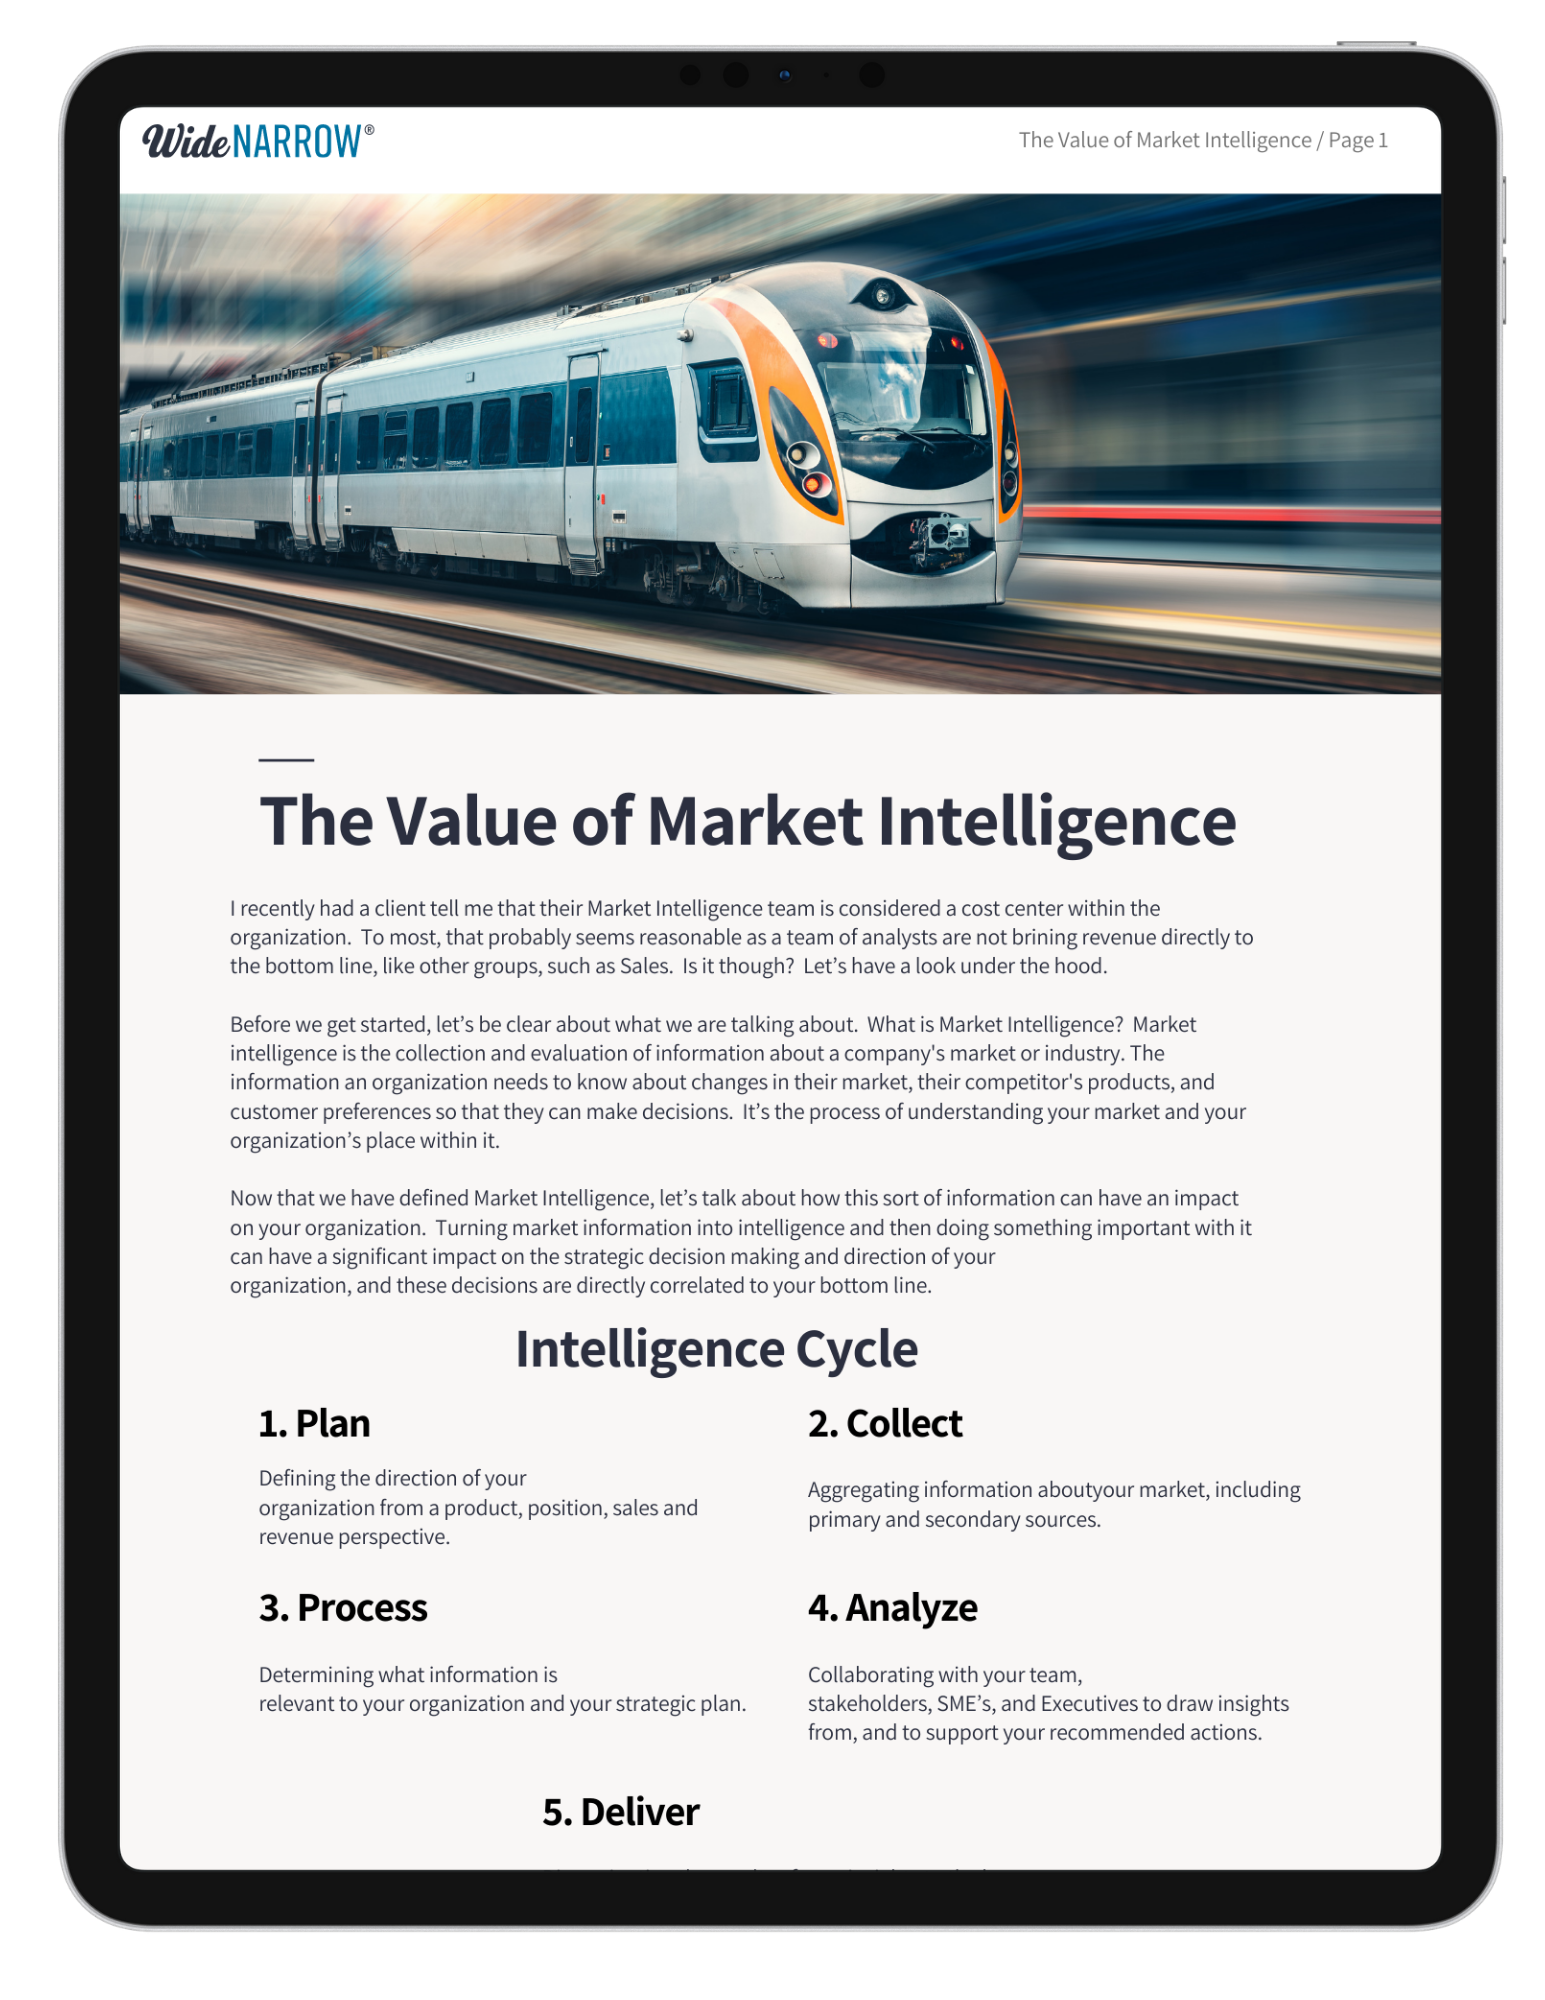 Cover Image - Value Of Market Intelligence